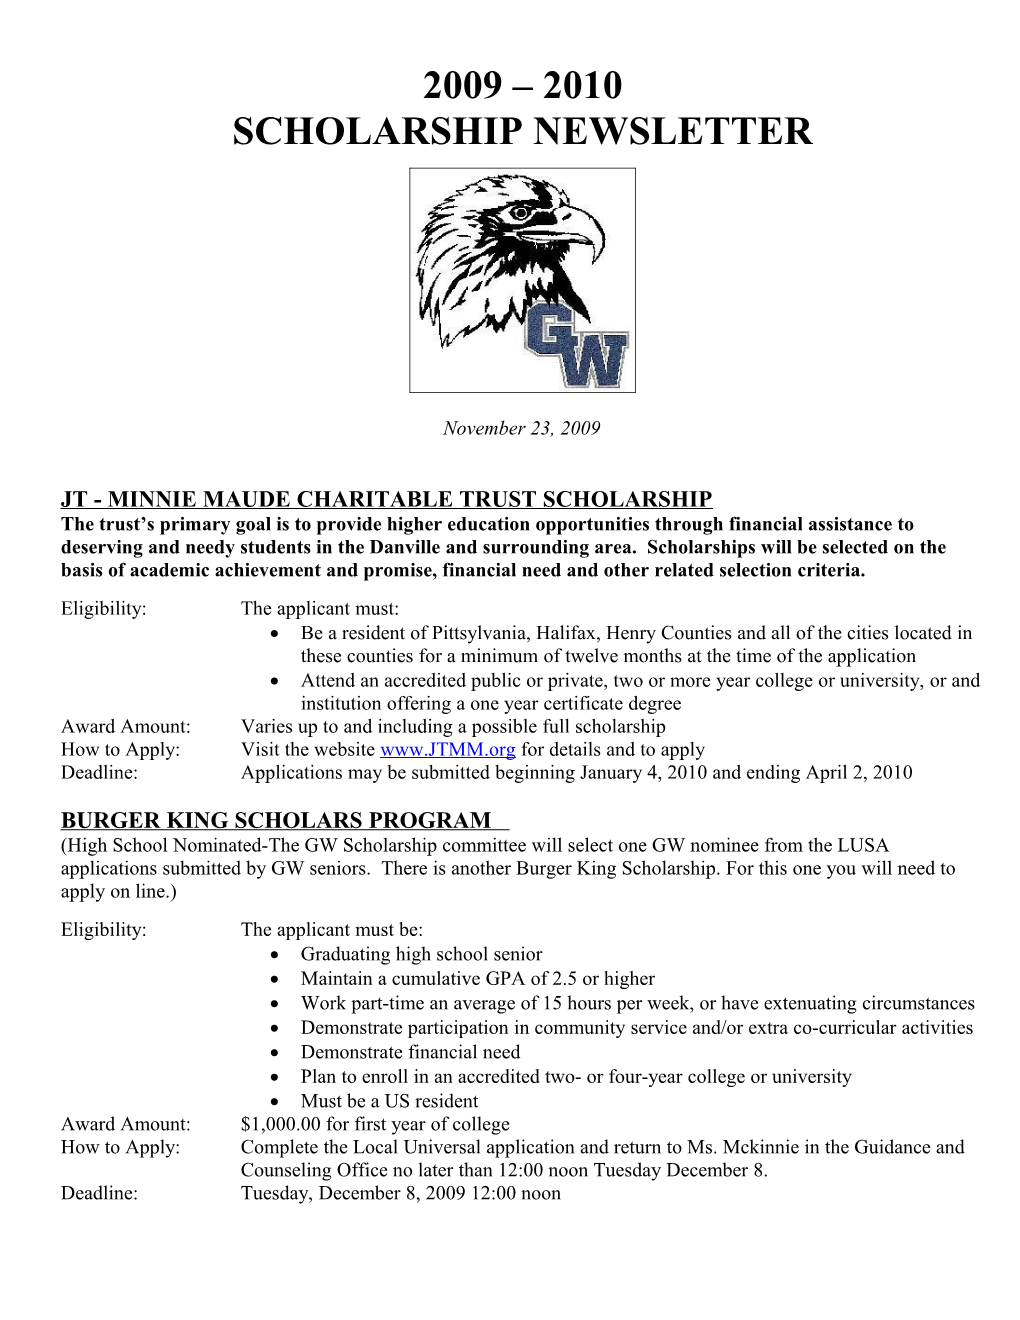 Jt - Minnie Maude Charitable Trust Scholarship